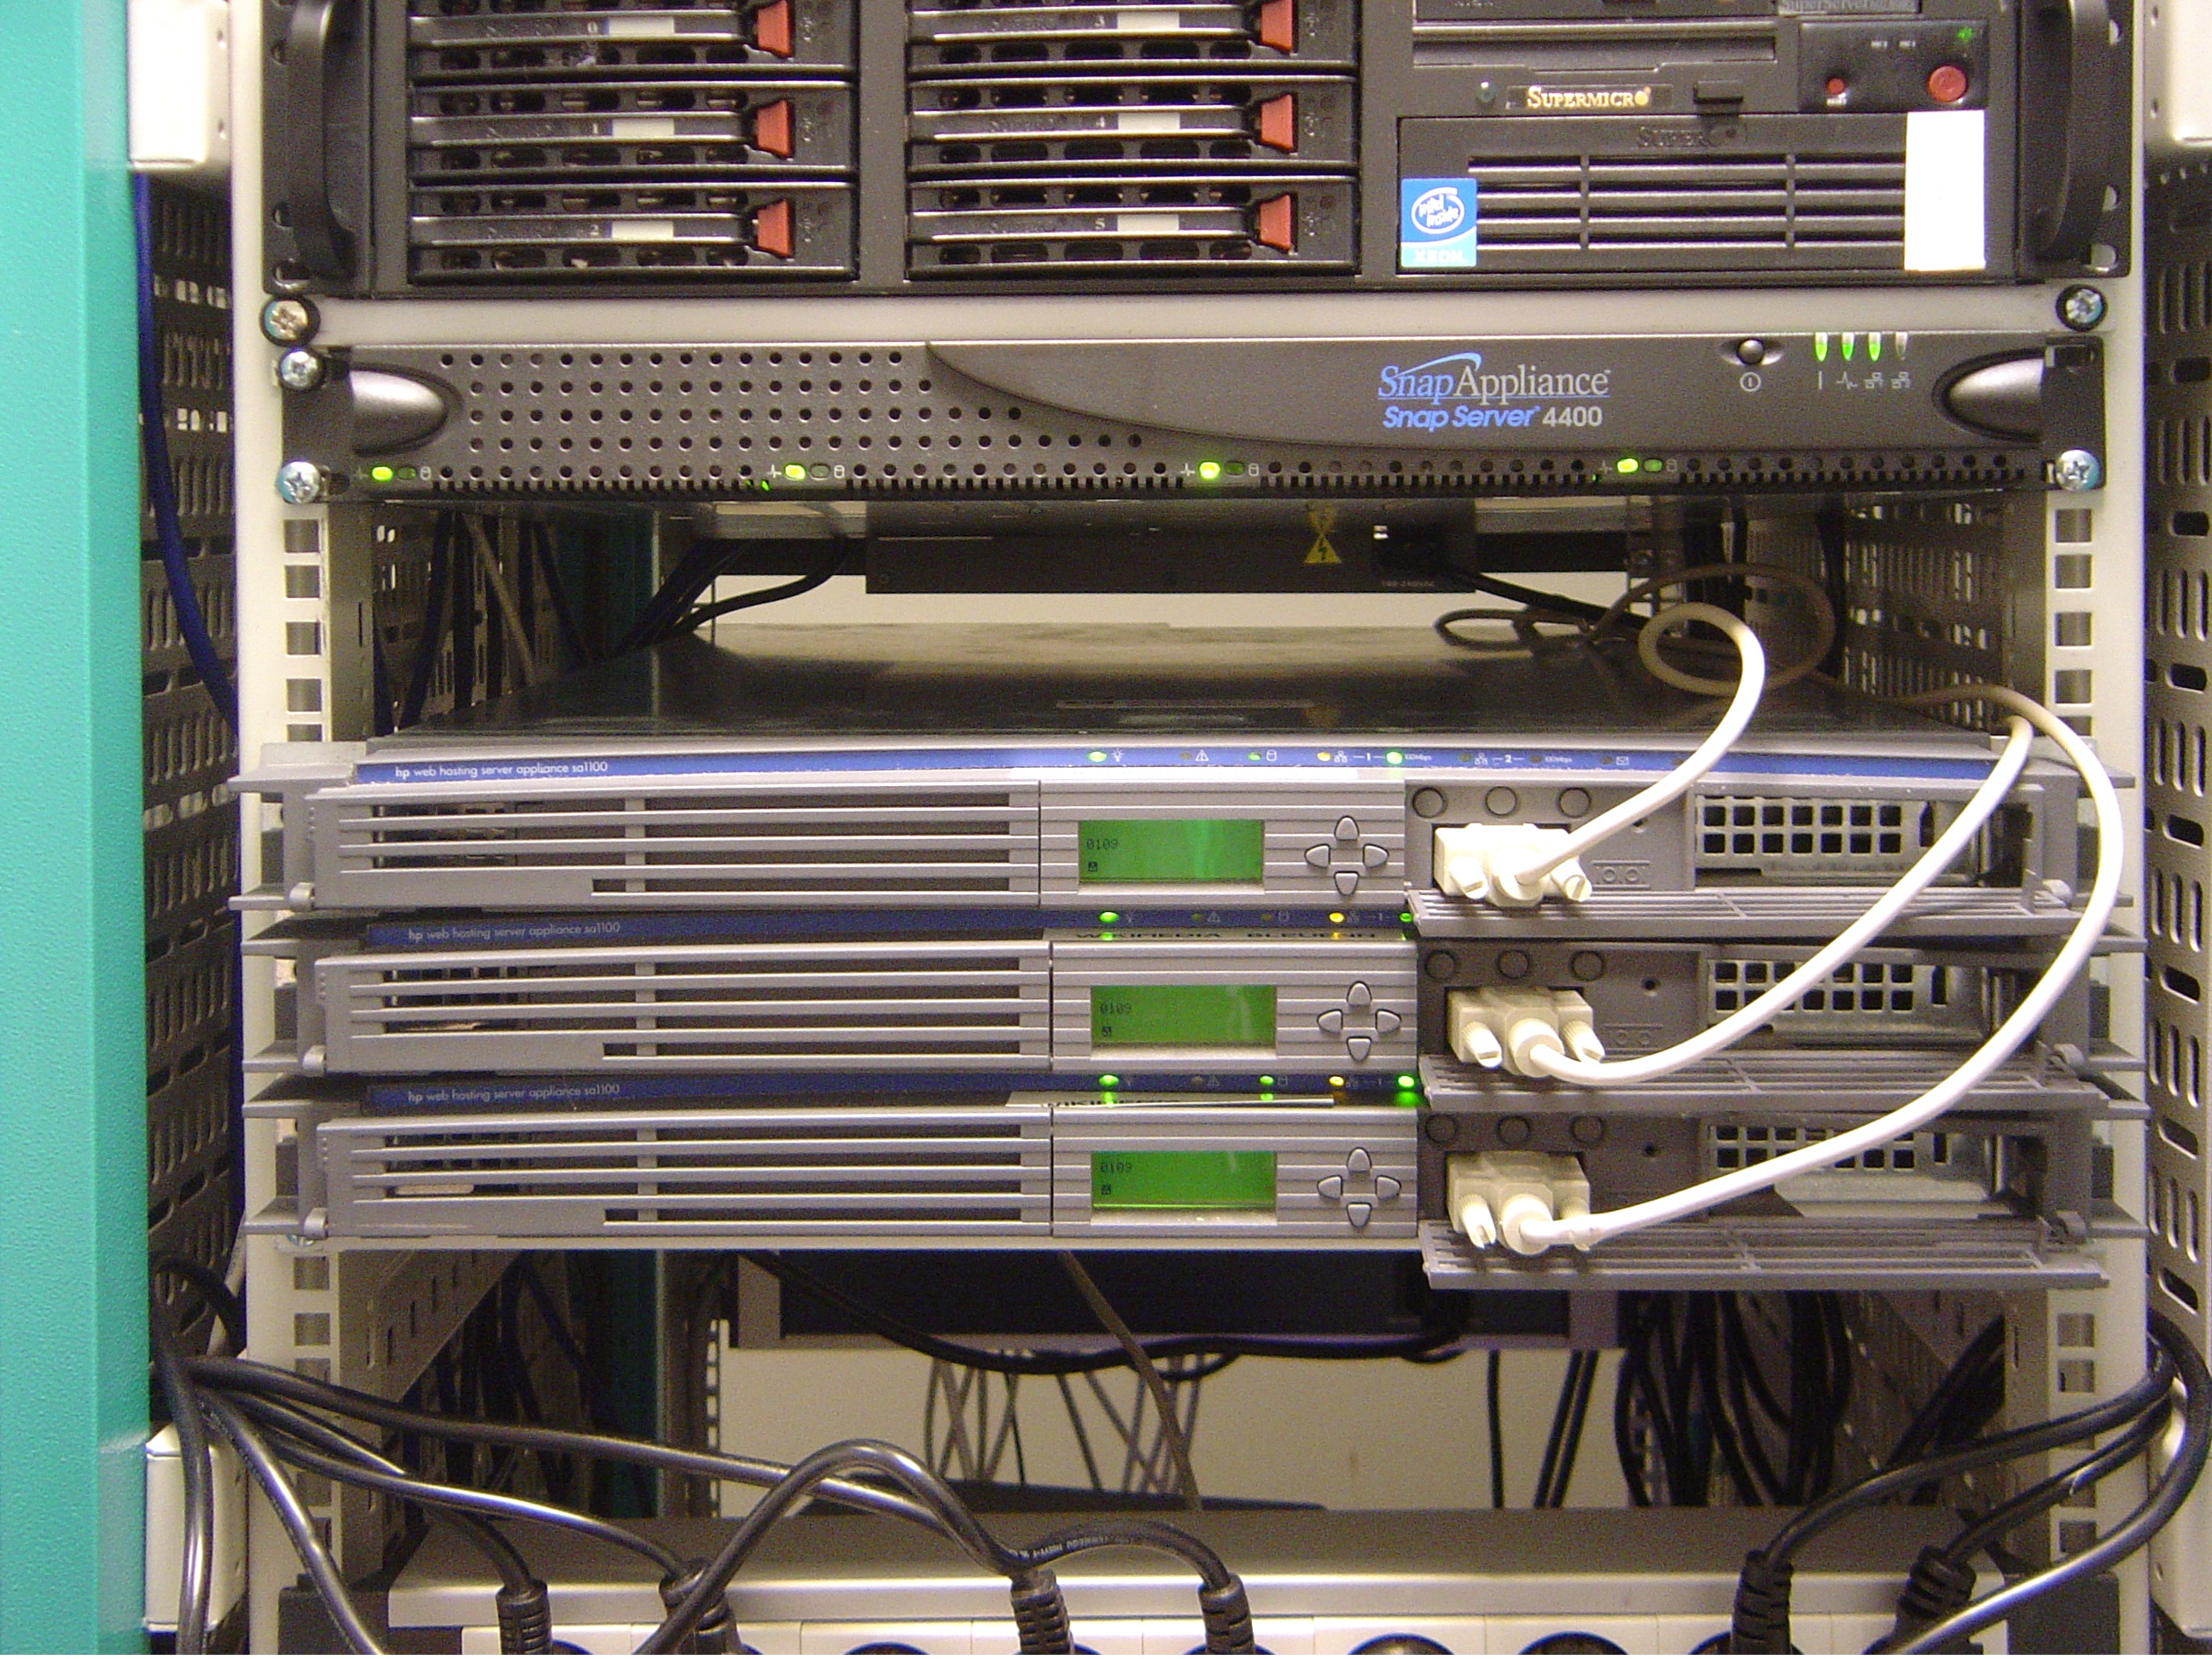 Server rack and DNS settings